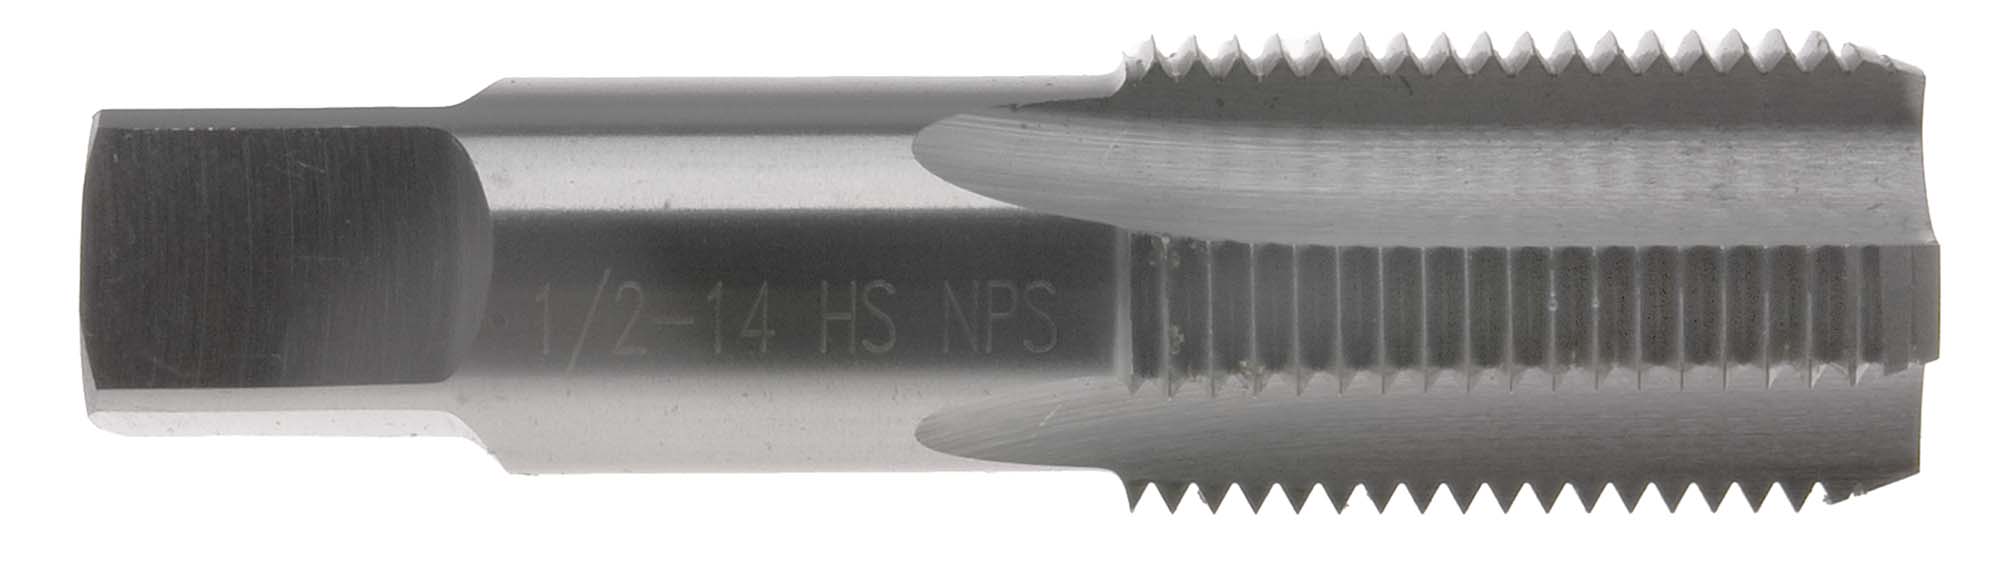 2"-11 1/2 NPS Straight Pipe Tap, High Speed Steel